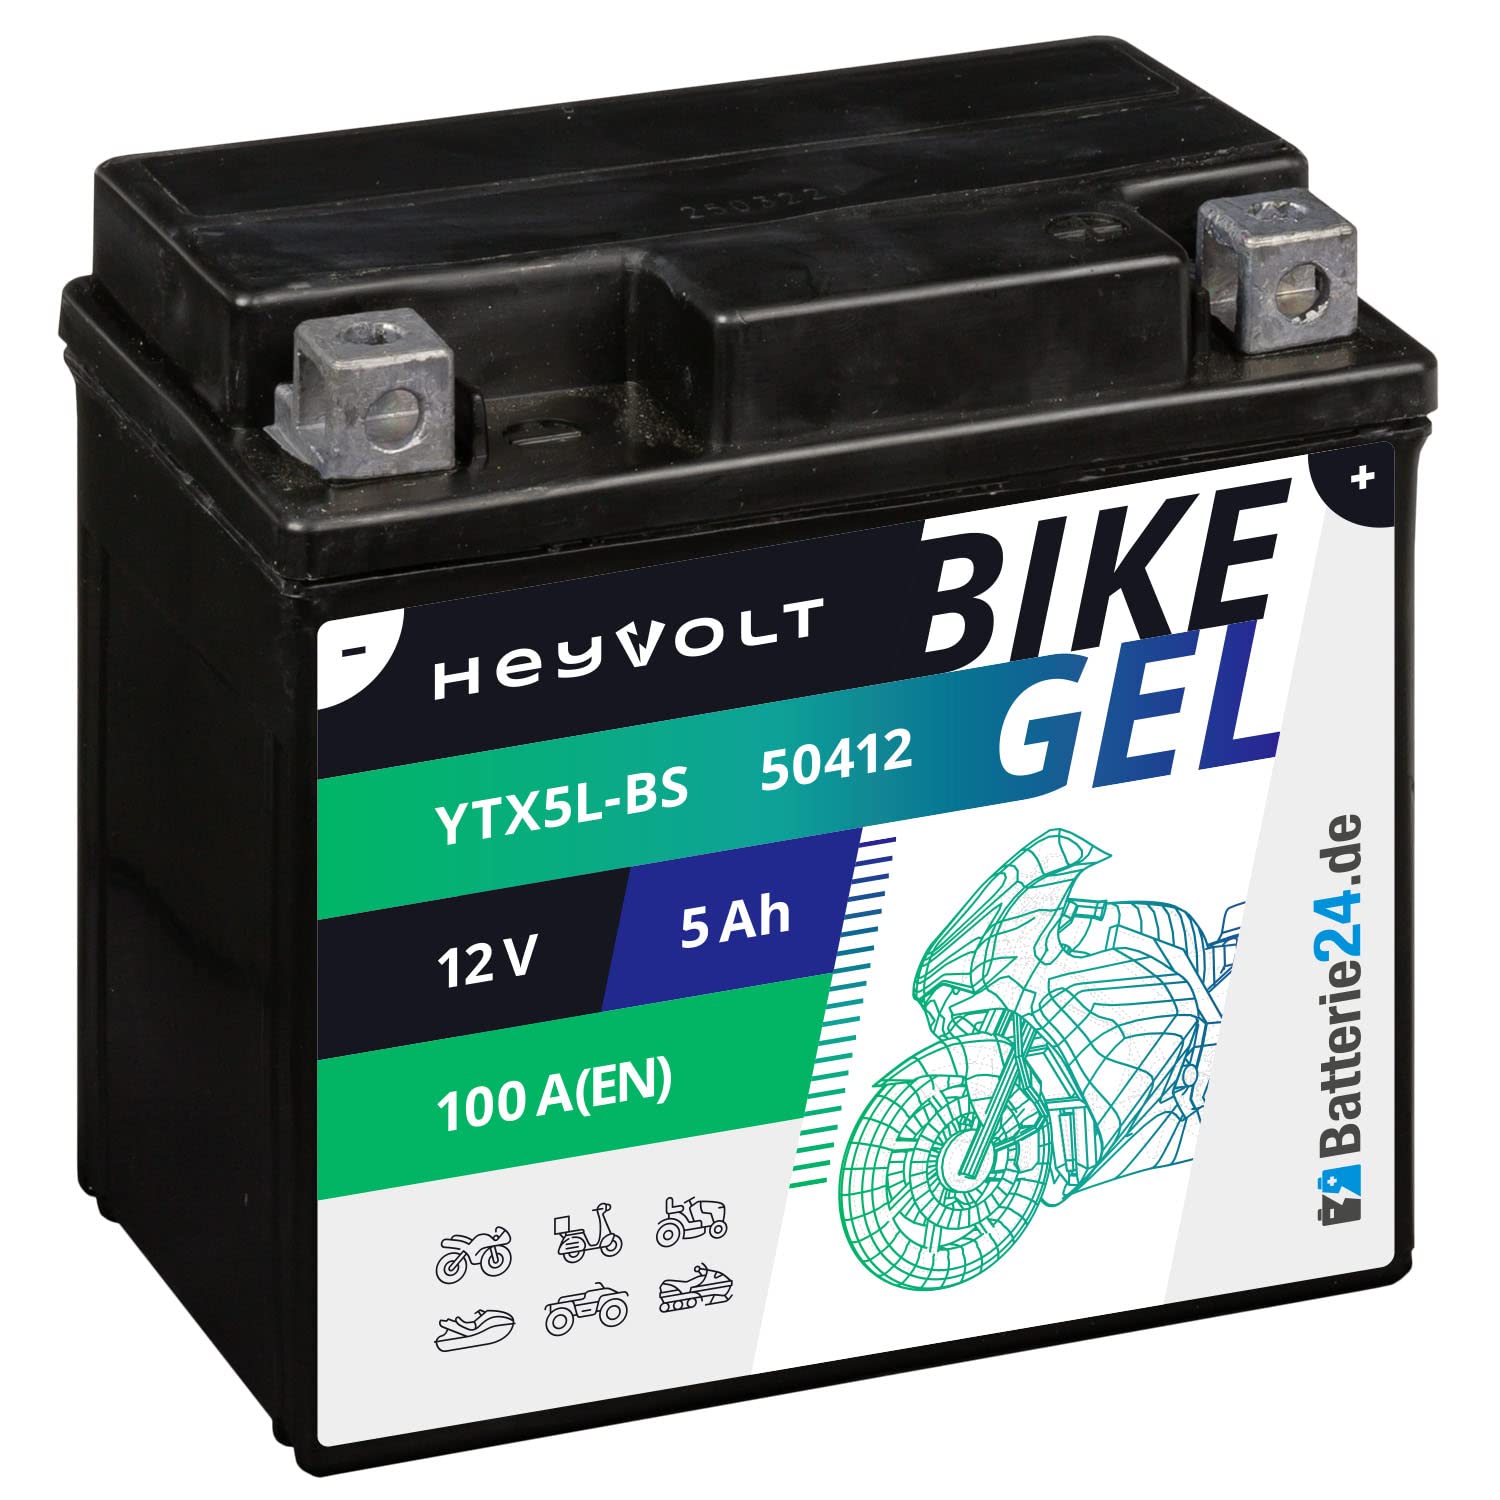 HeyVolt GEL Motorradbatterie 12V 5Ah Rollerbatterie YTX5L-BS CTX5L-BS 50412 GTX5L-BS von Batterie24.de